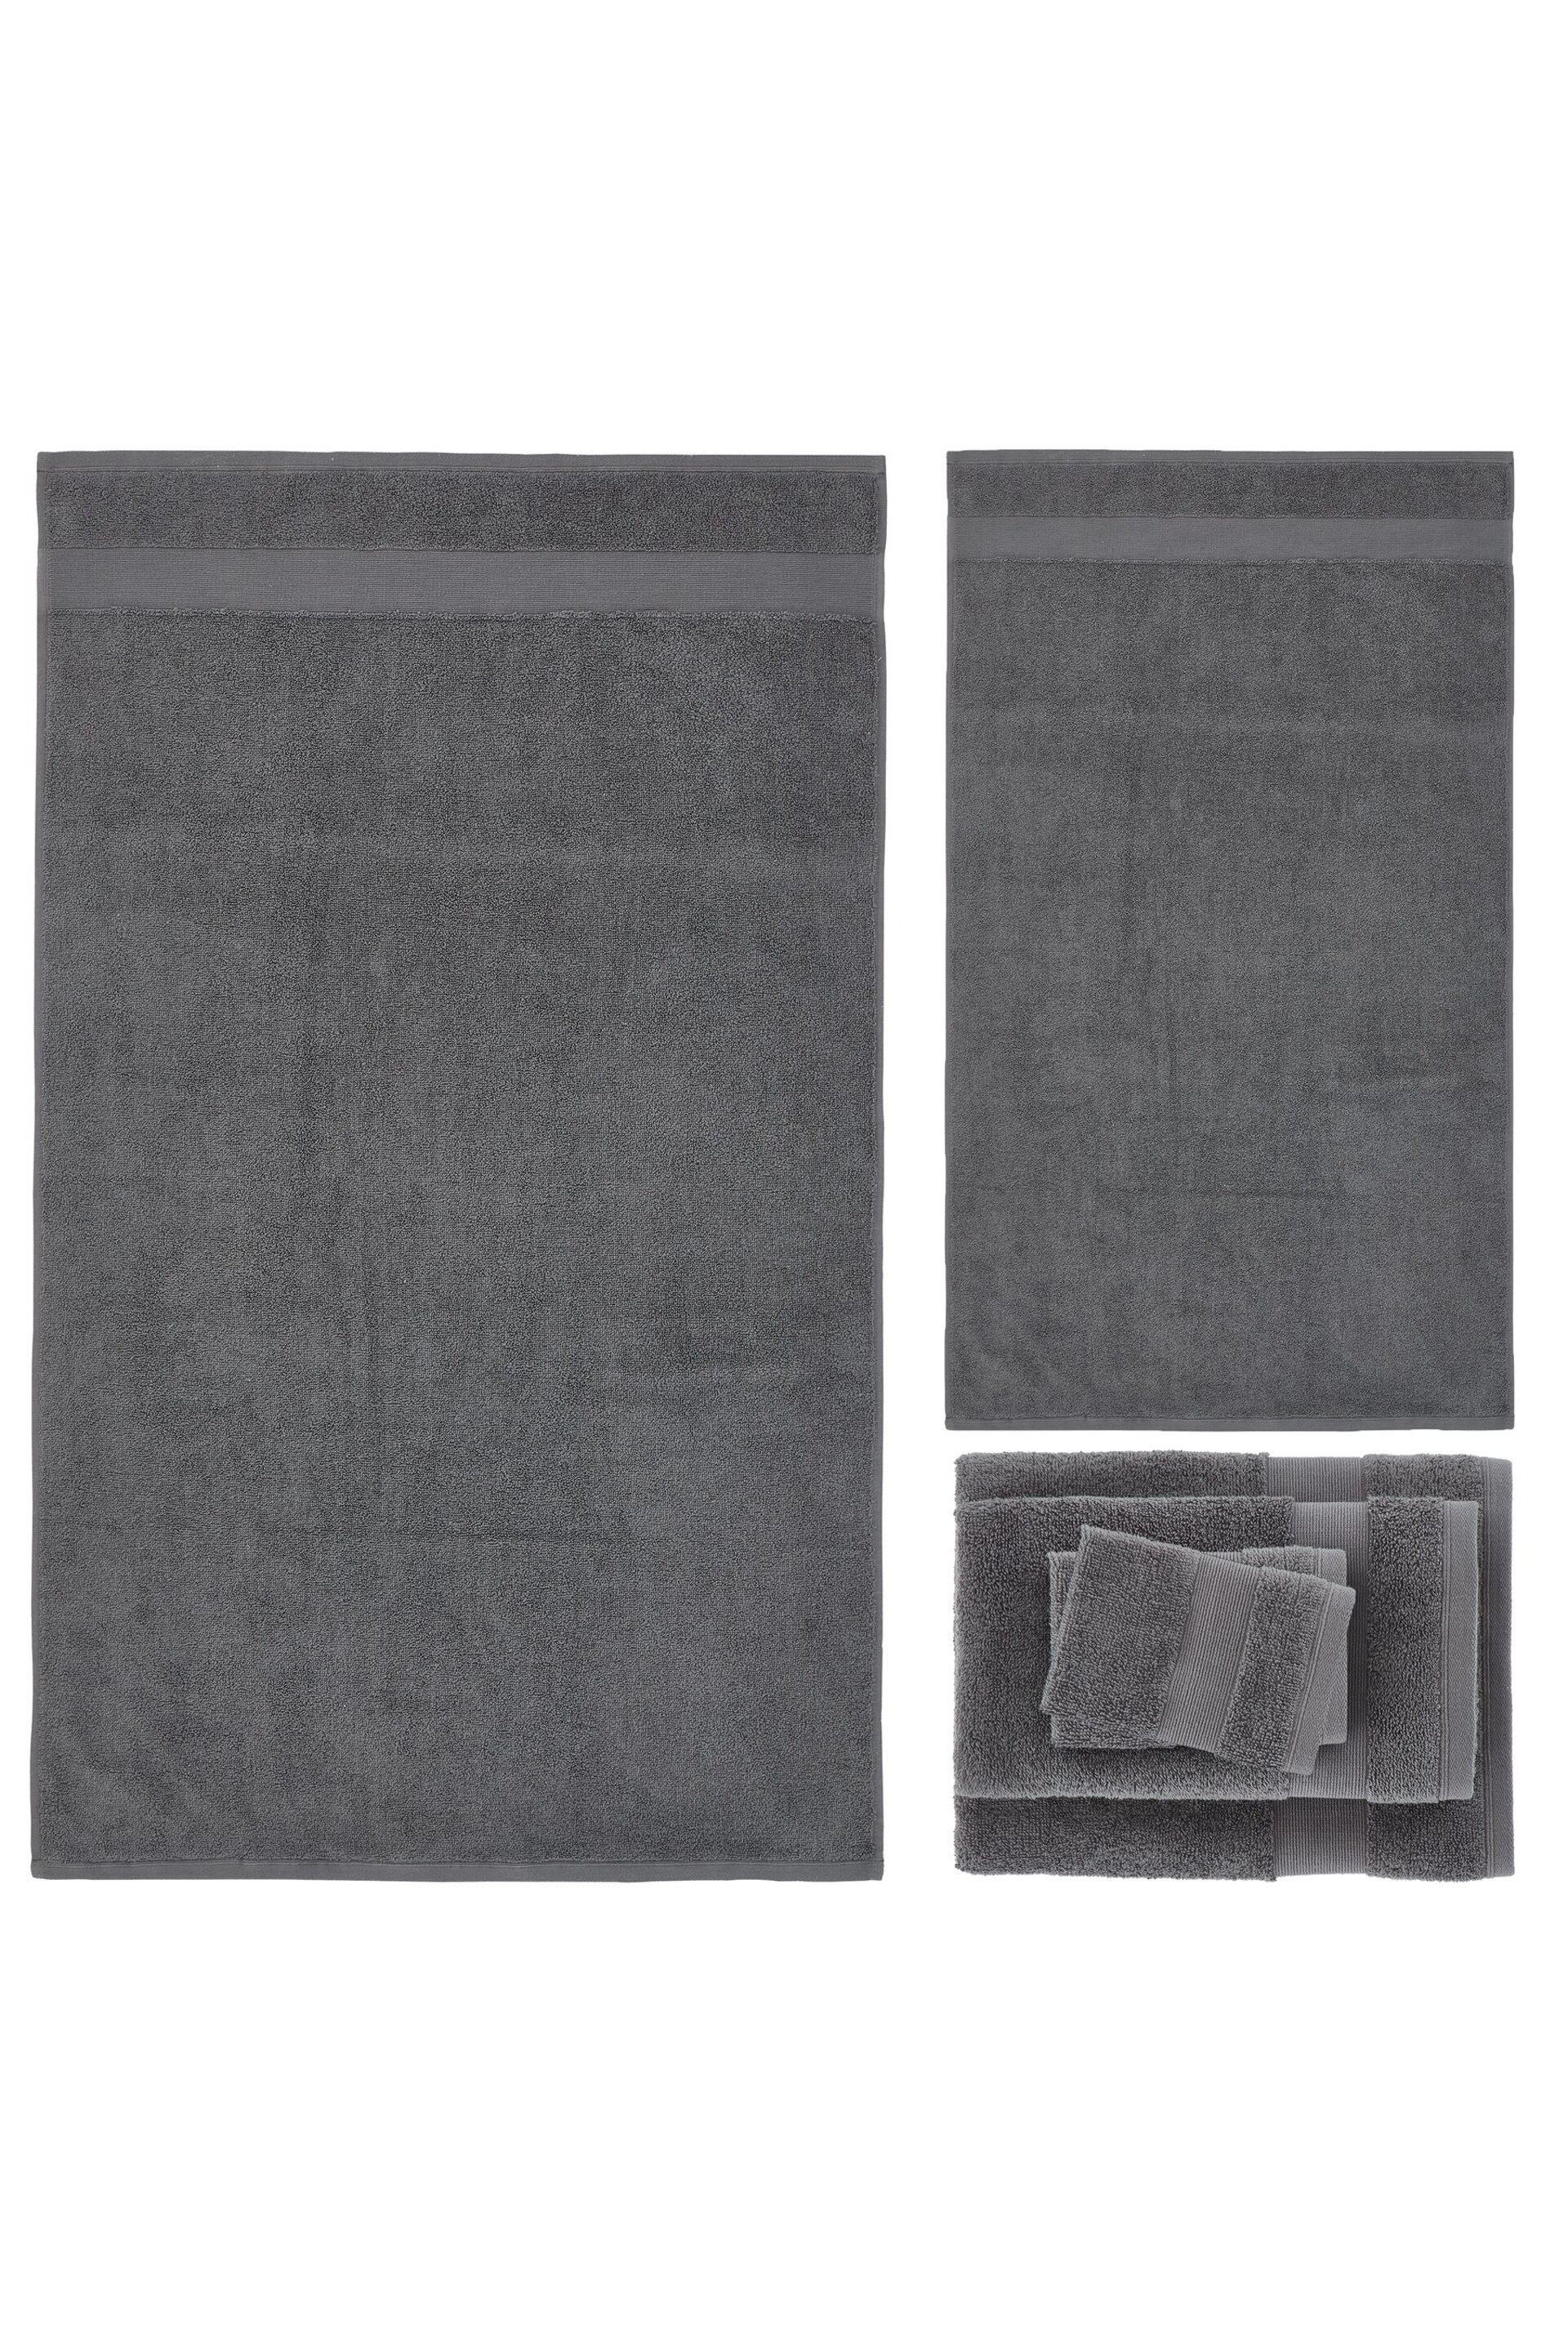 Catherine Lansfield 6 Piece Grey Anti-Bacterial Towel Bale - Image 5 of 5